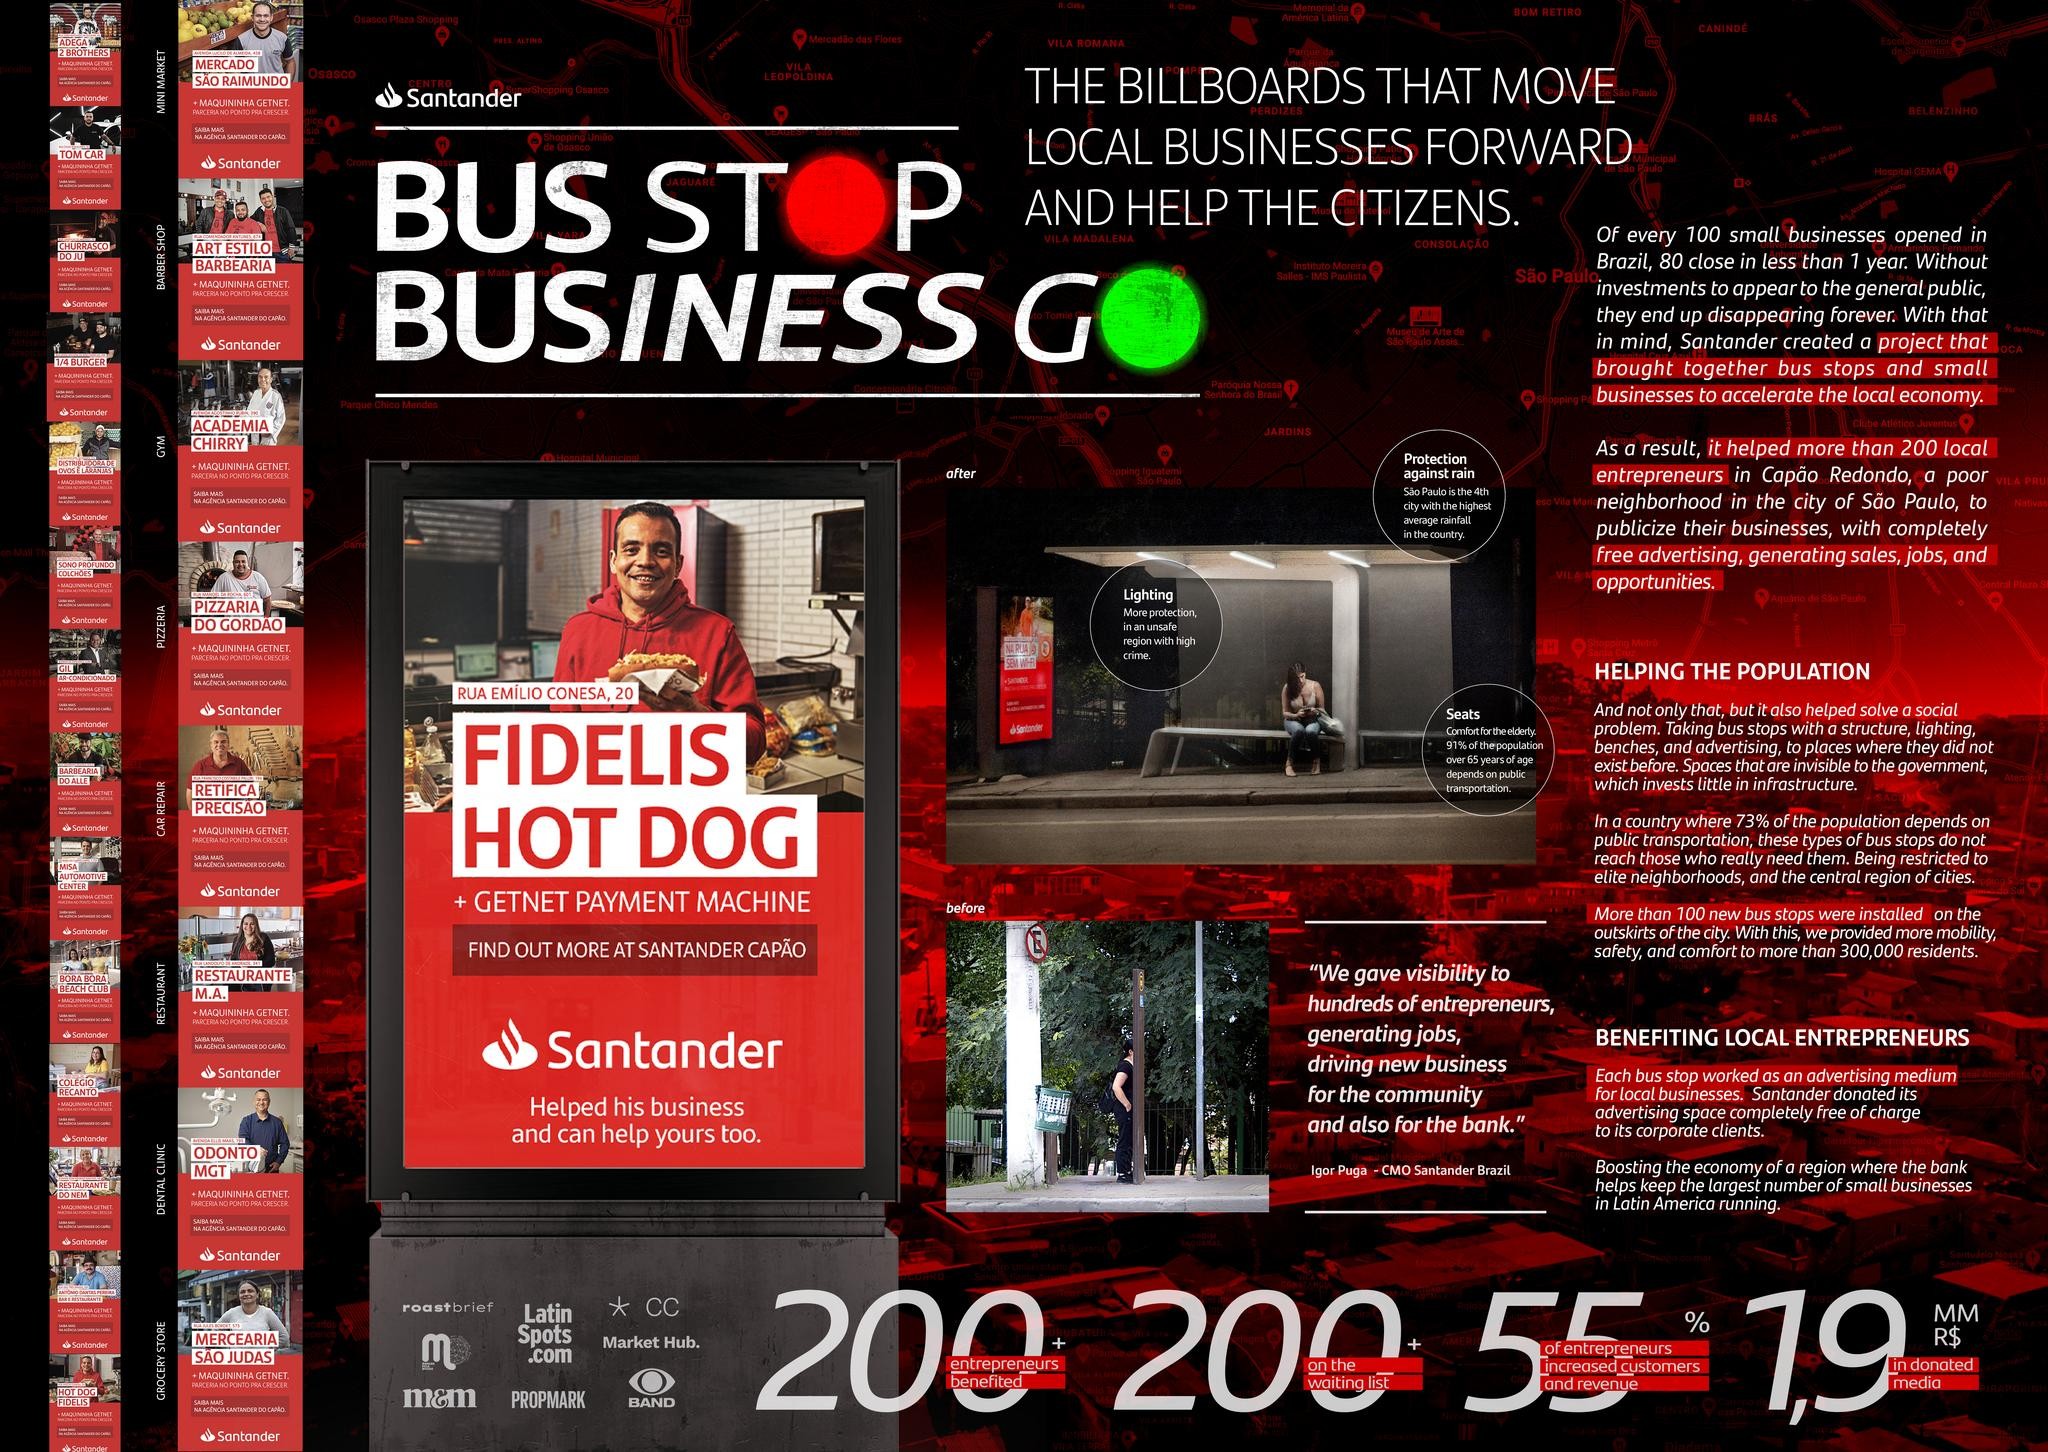 Bus Stop Business go